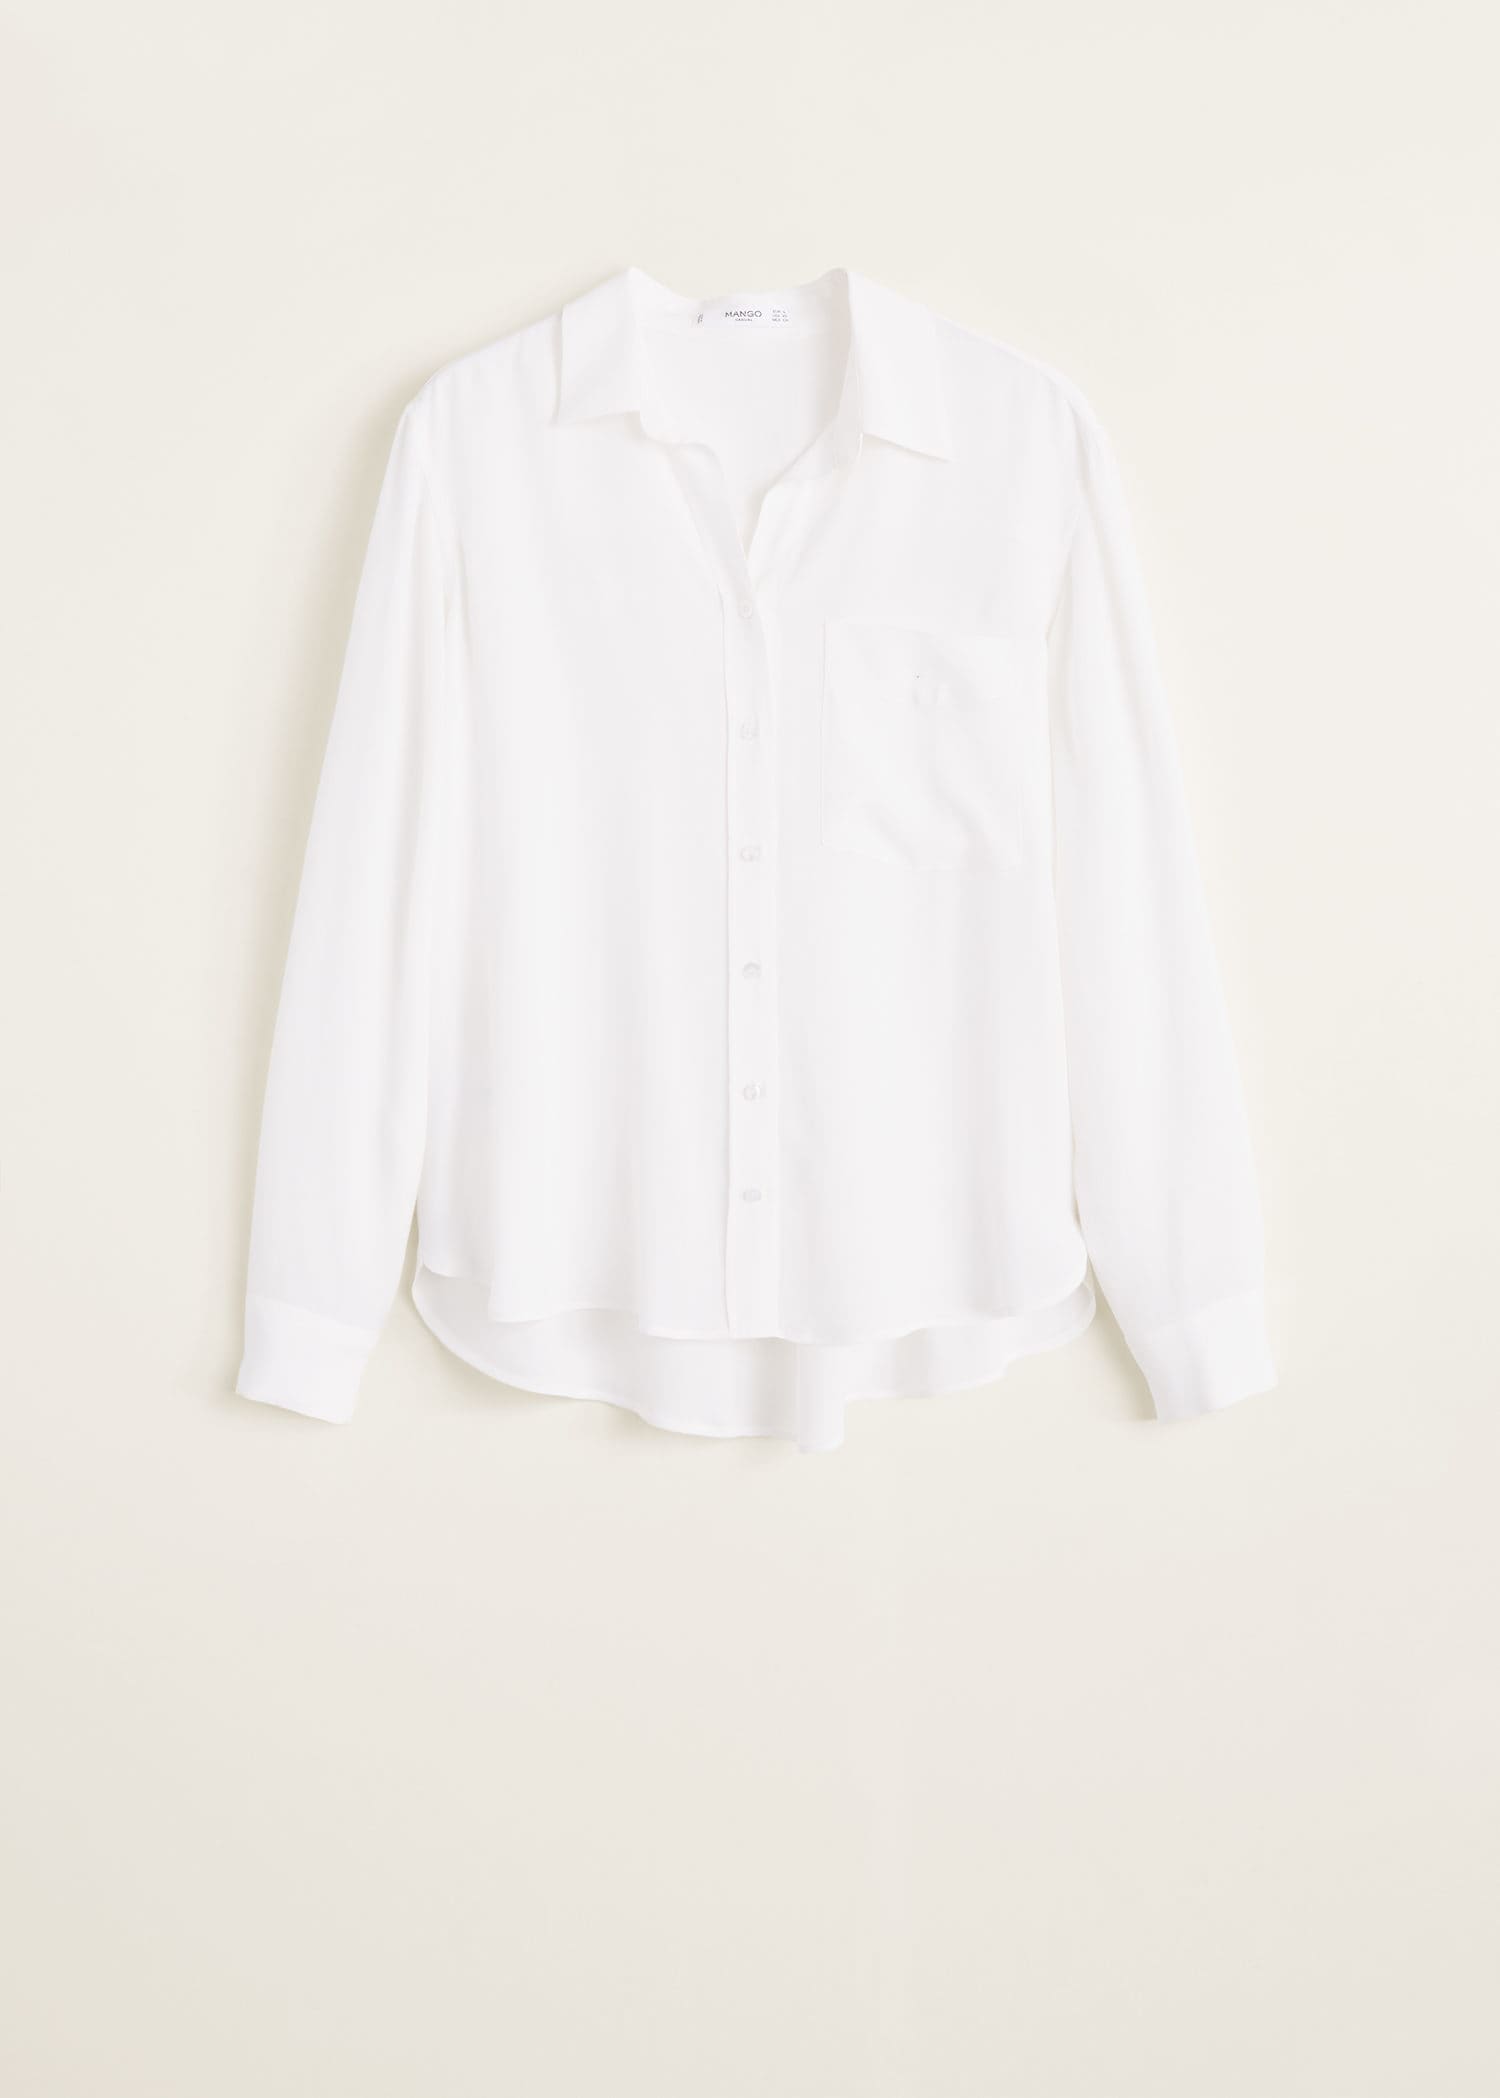 Camisa branca, Mango, €19,99